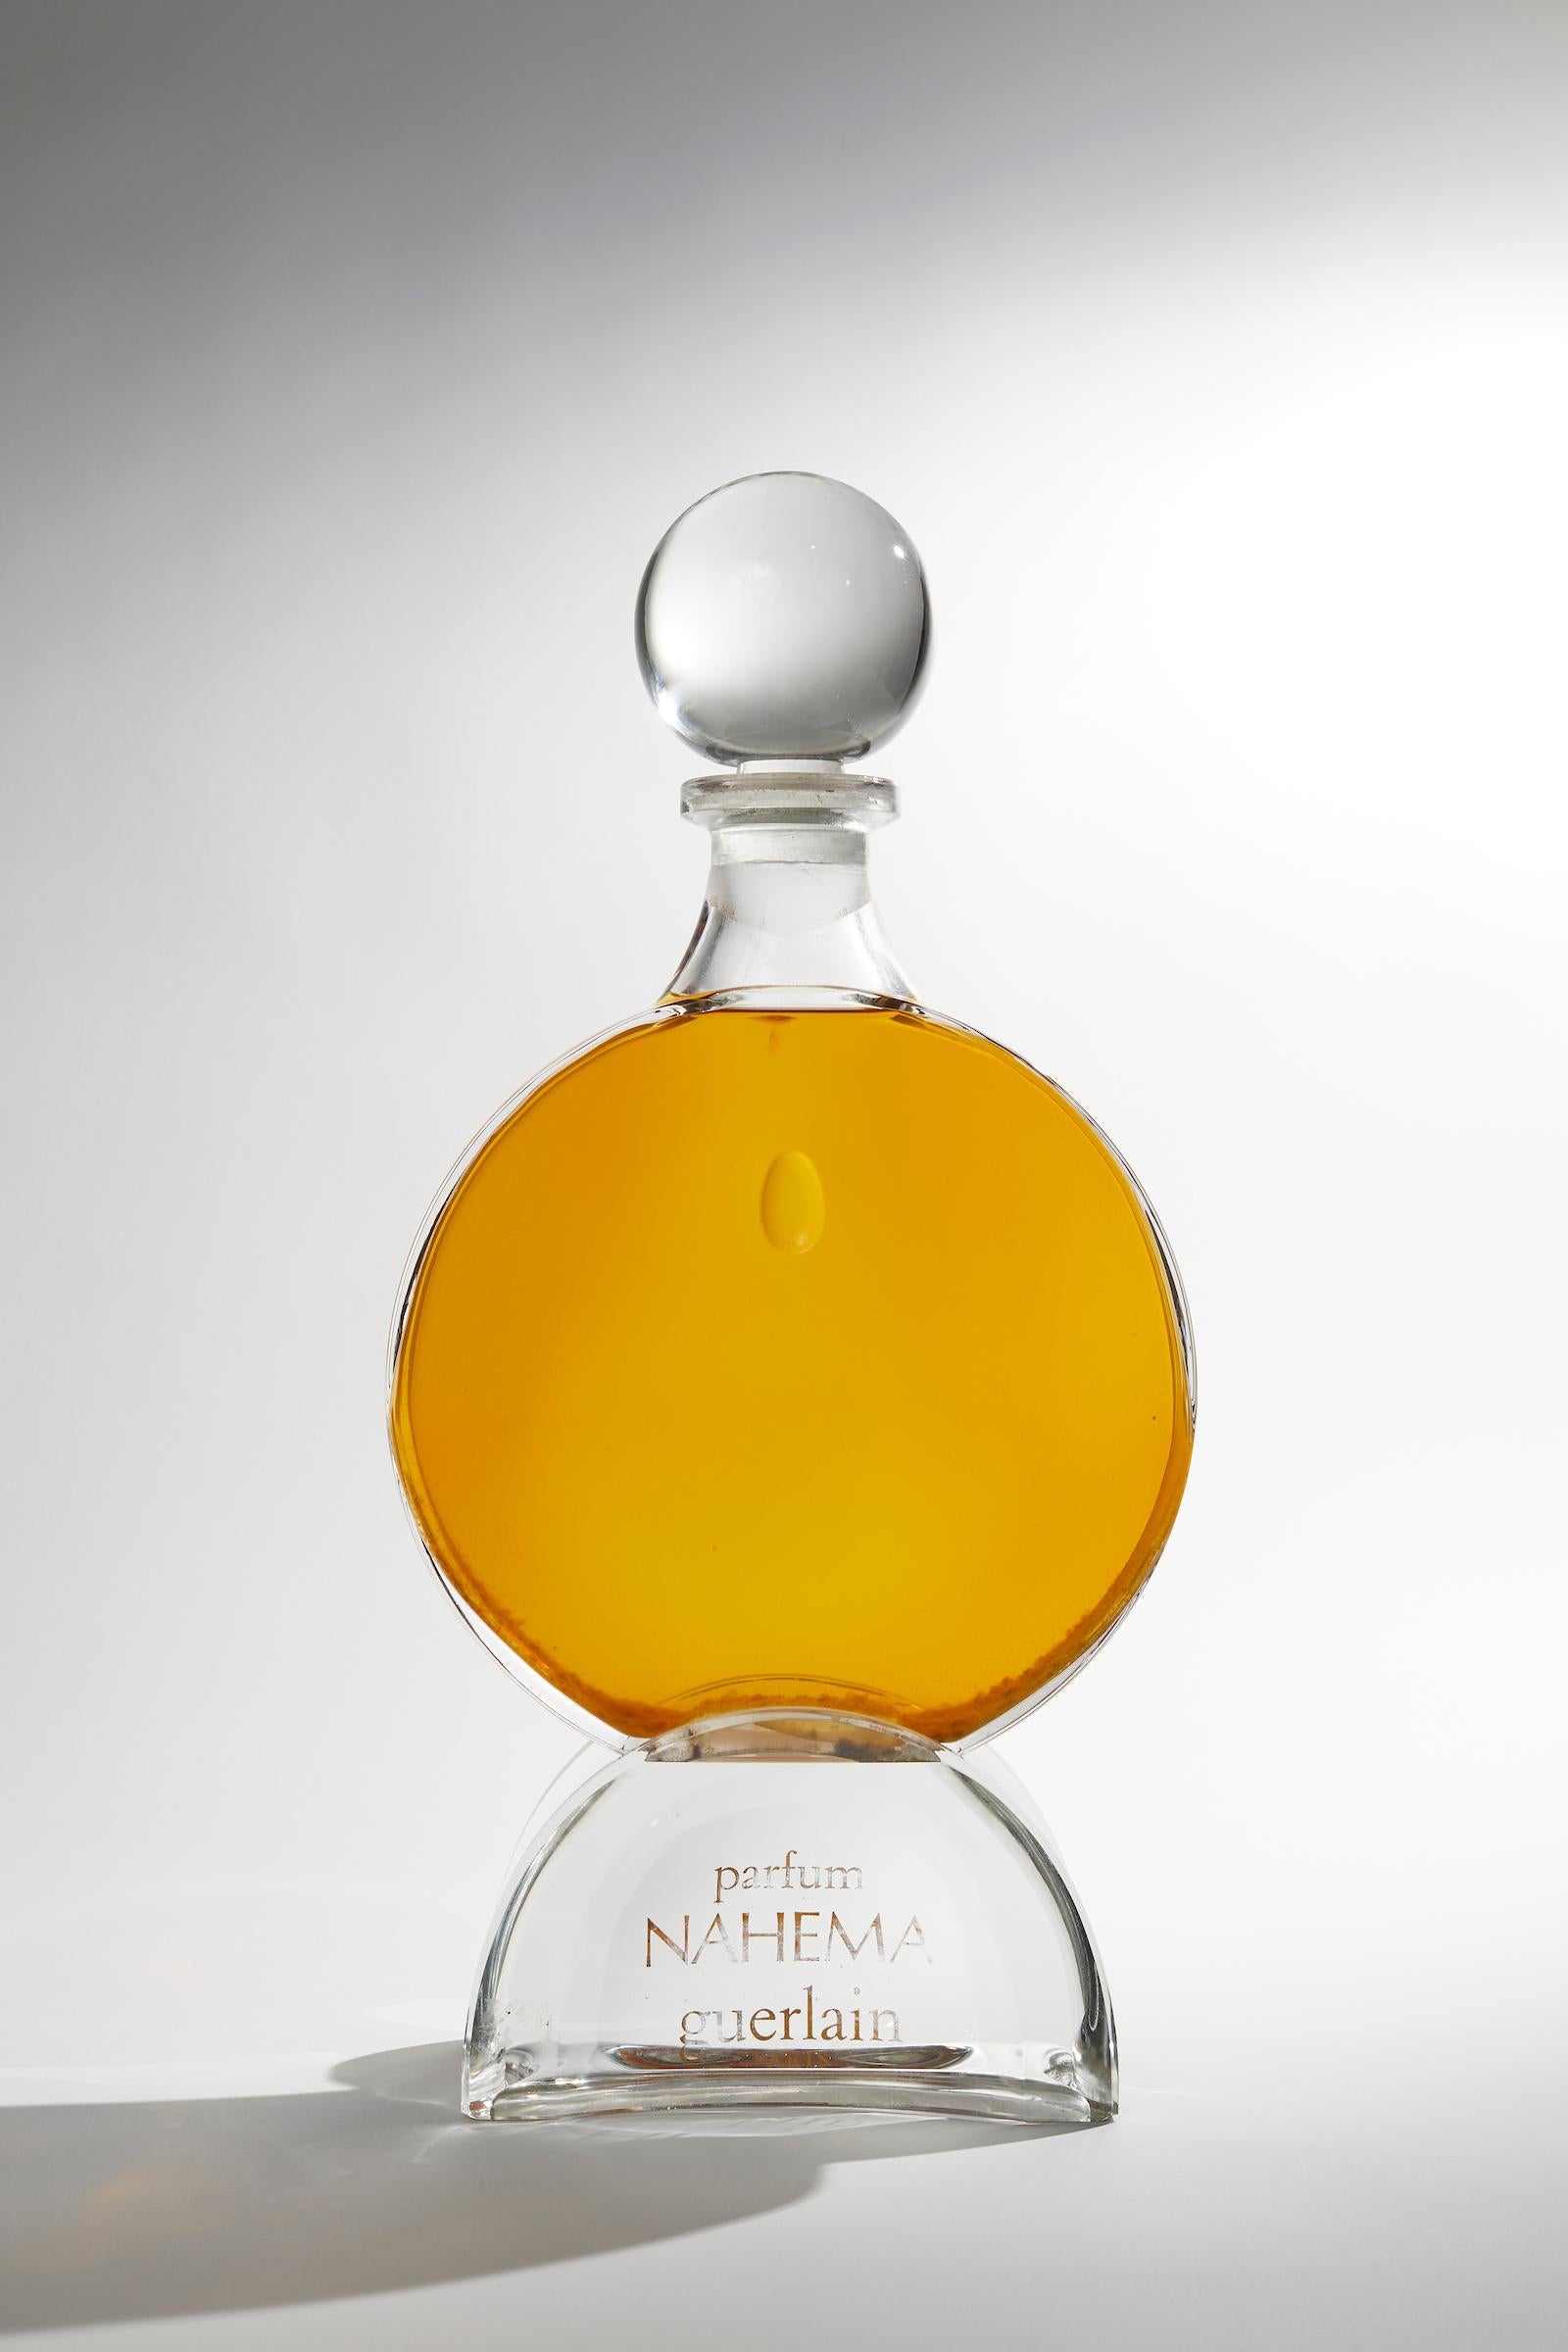 Nahema glass display perfume bottle by Guerlain.